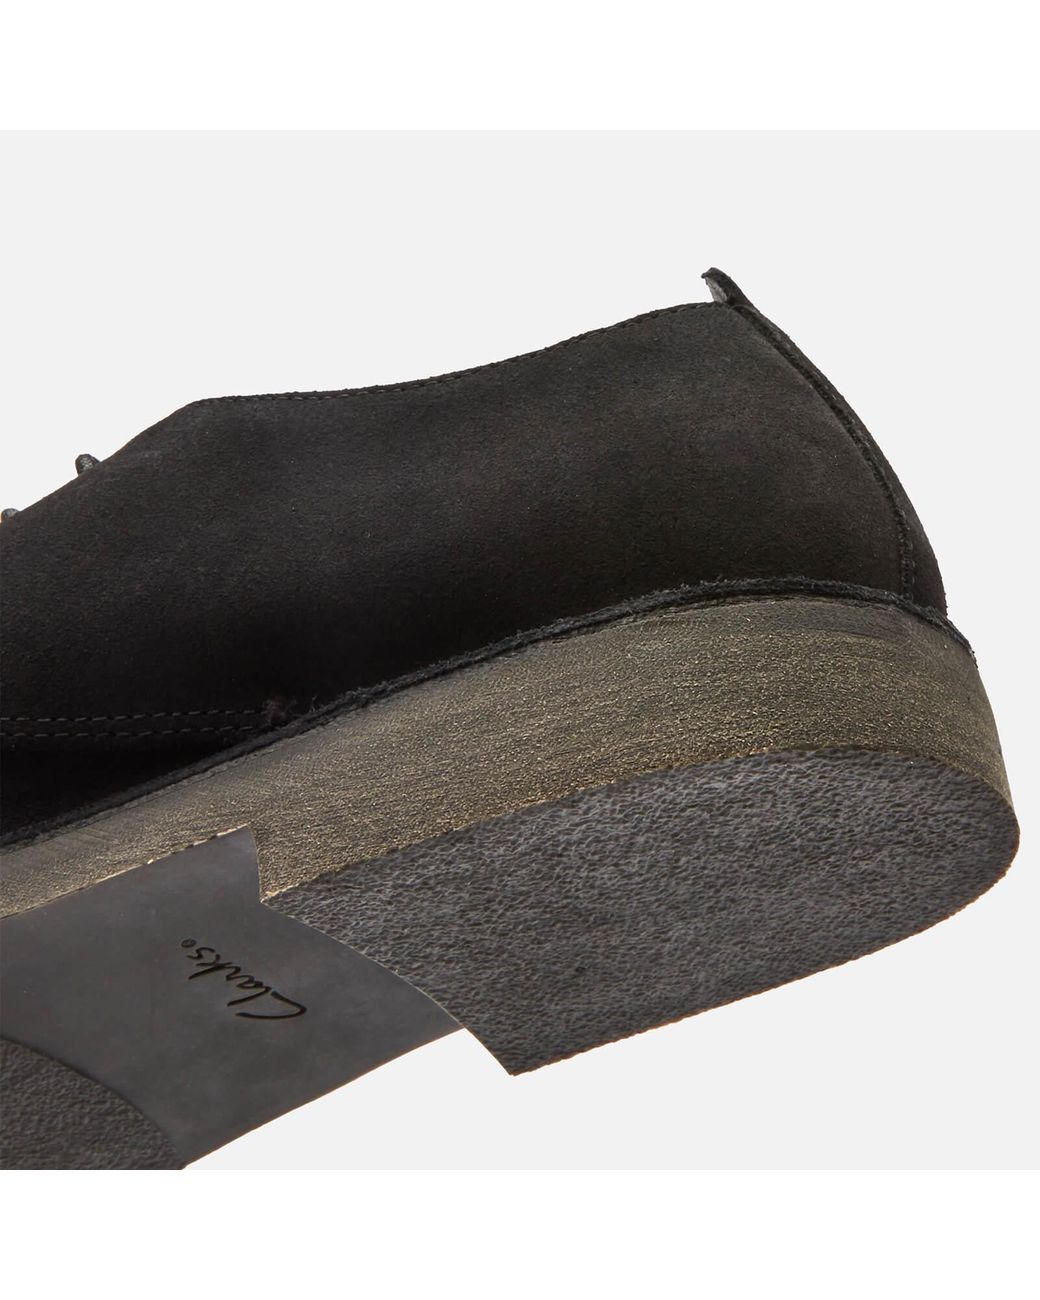 Clarks Desert London 2 Suede Derby Shoes in Black for Men | Lyst